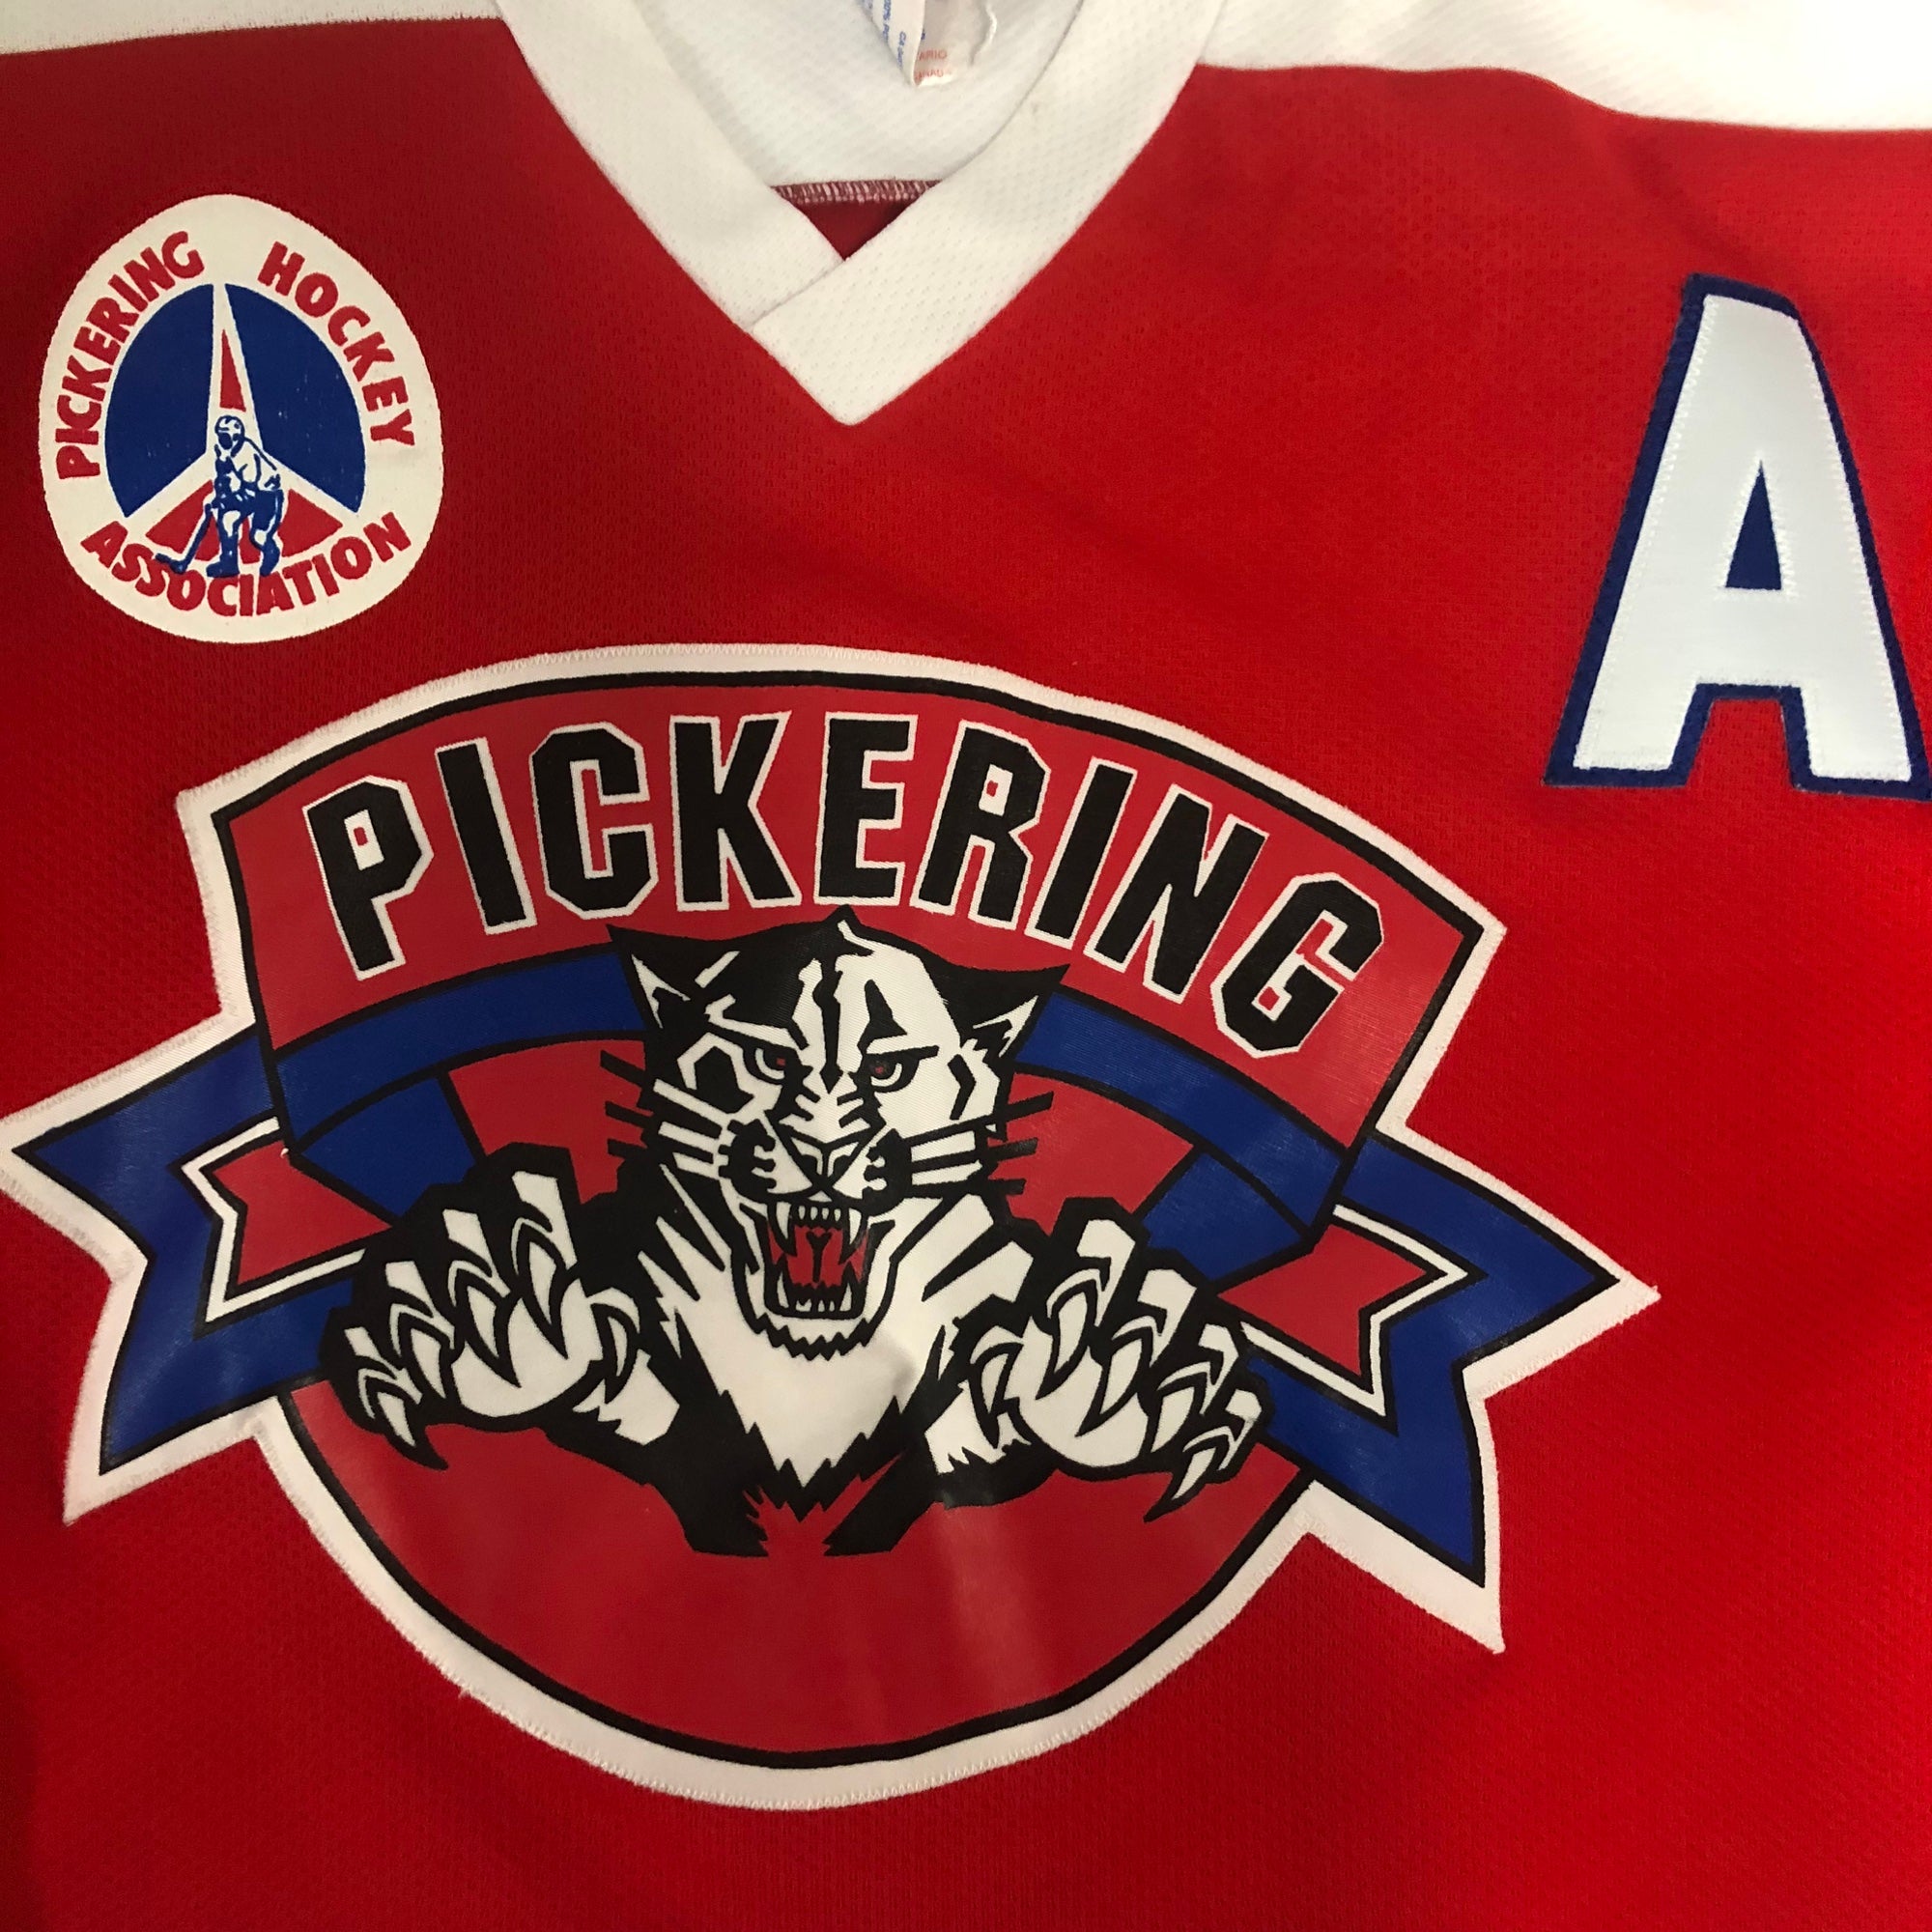 Panthers fan shop selling an MiC barkov jersey for $320 amongst a